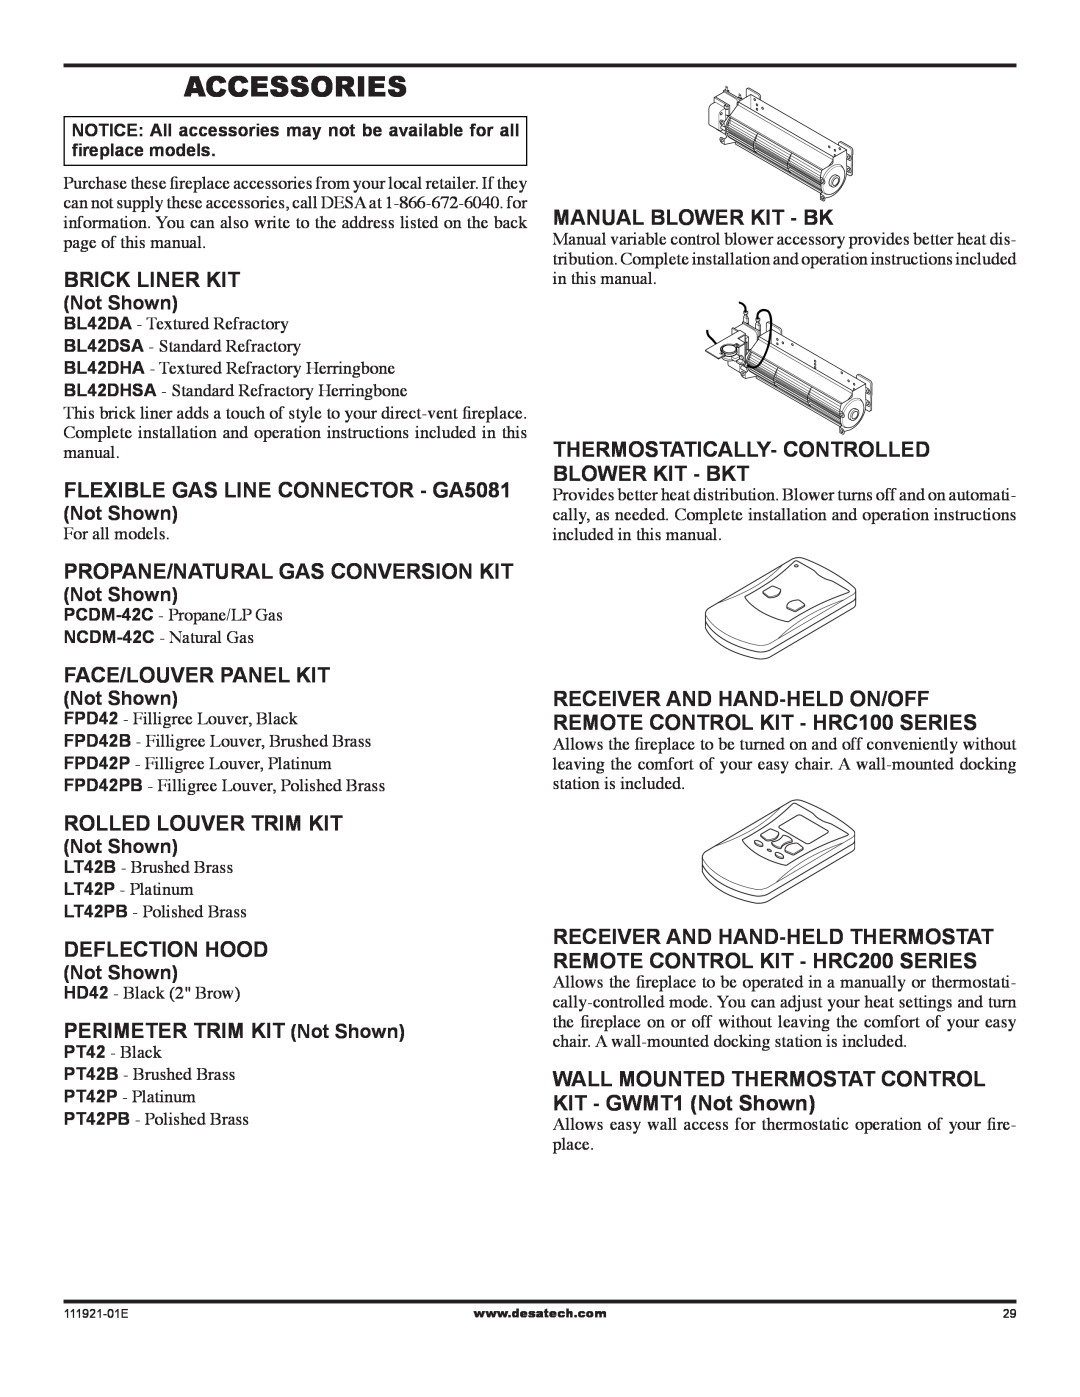 Desa (V)K42P Accessories, Brick Liner KIT, Flexible gas Line connector - GA5081, Manual blower Kit - BK, Deflection hood 